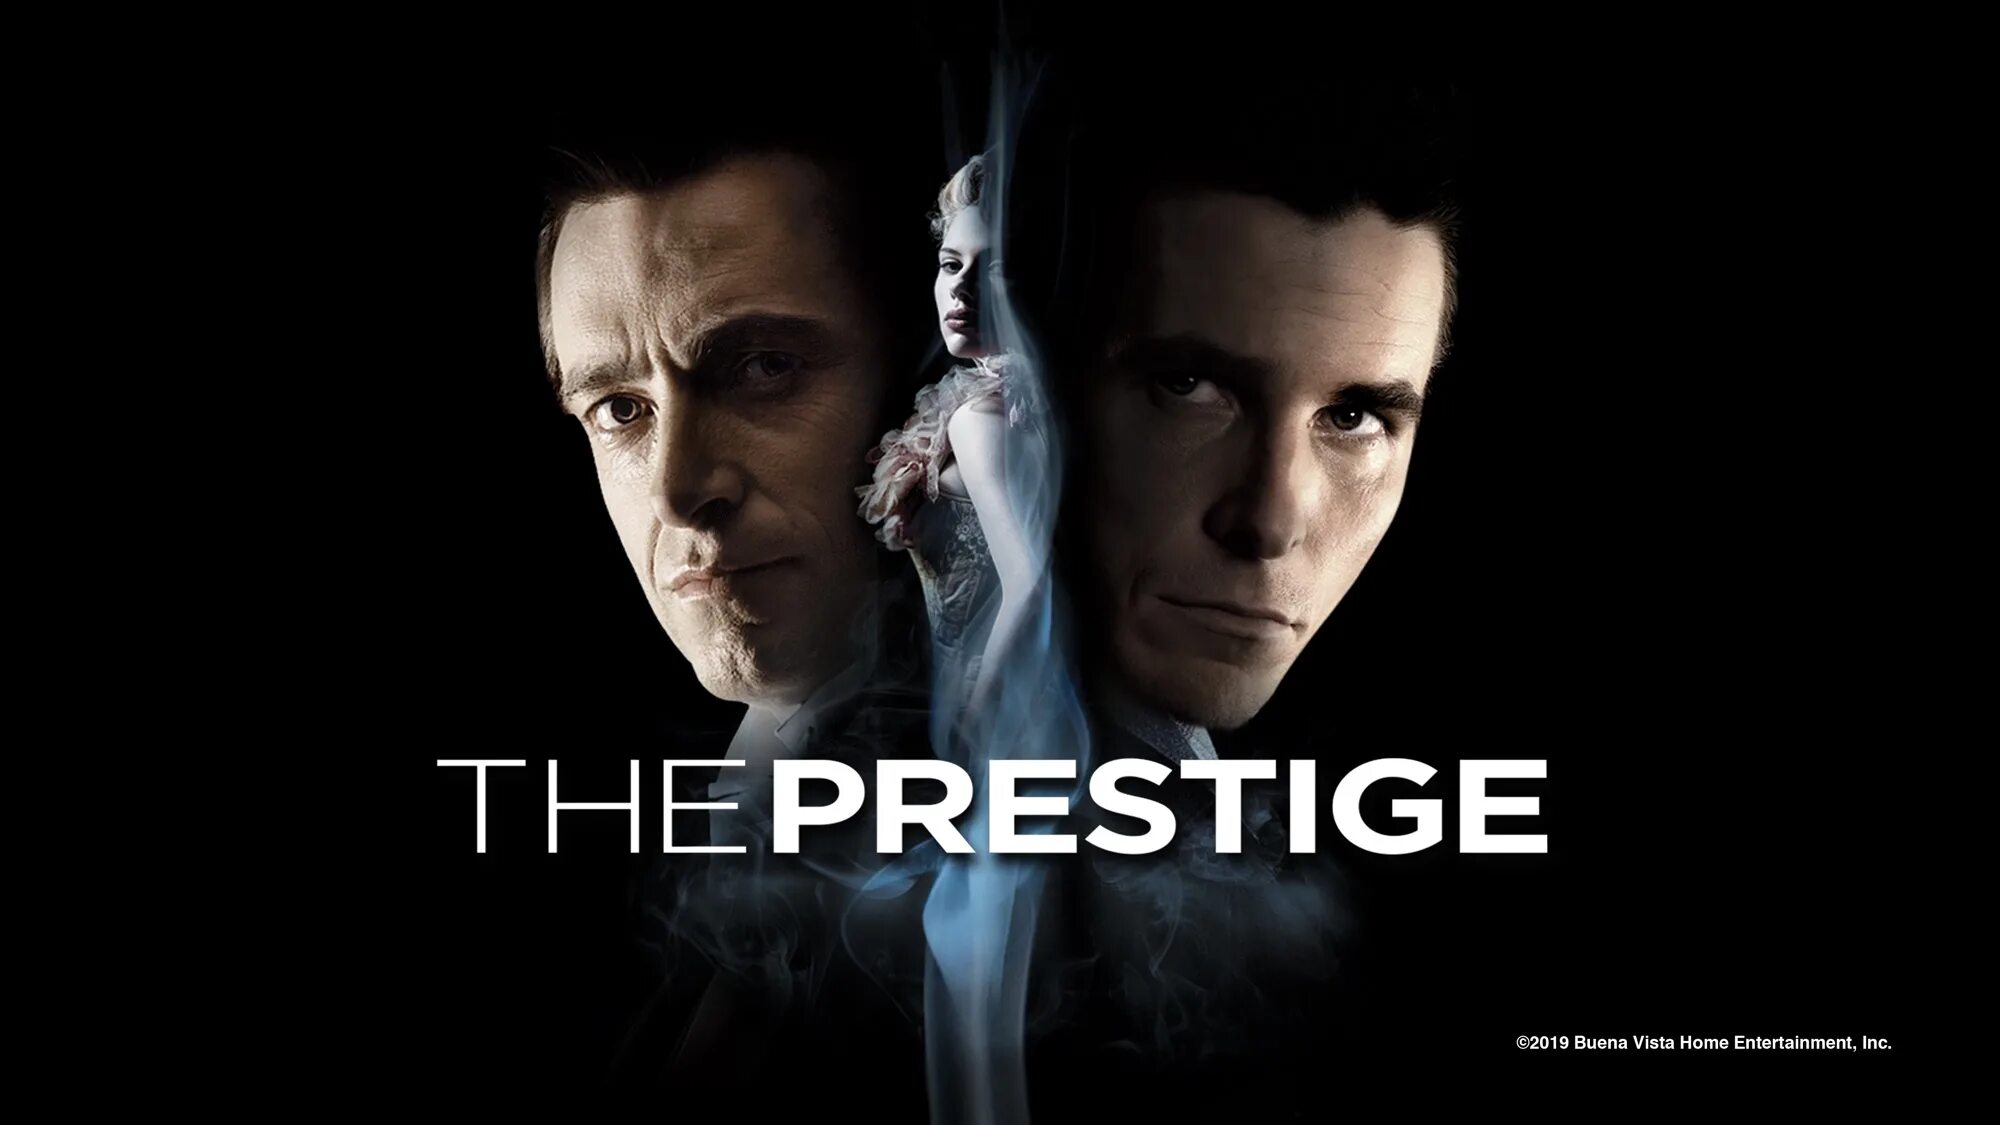 The Prestige 2006. Кристиан Бейл Престиж. Престиж (2007) (the Prestige). Престиж Кристофер Нолан.